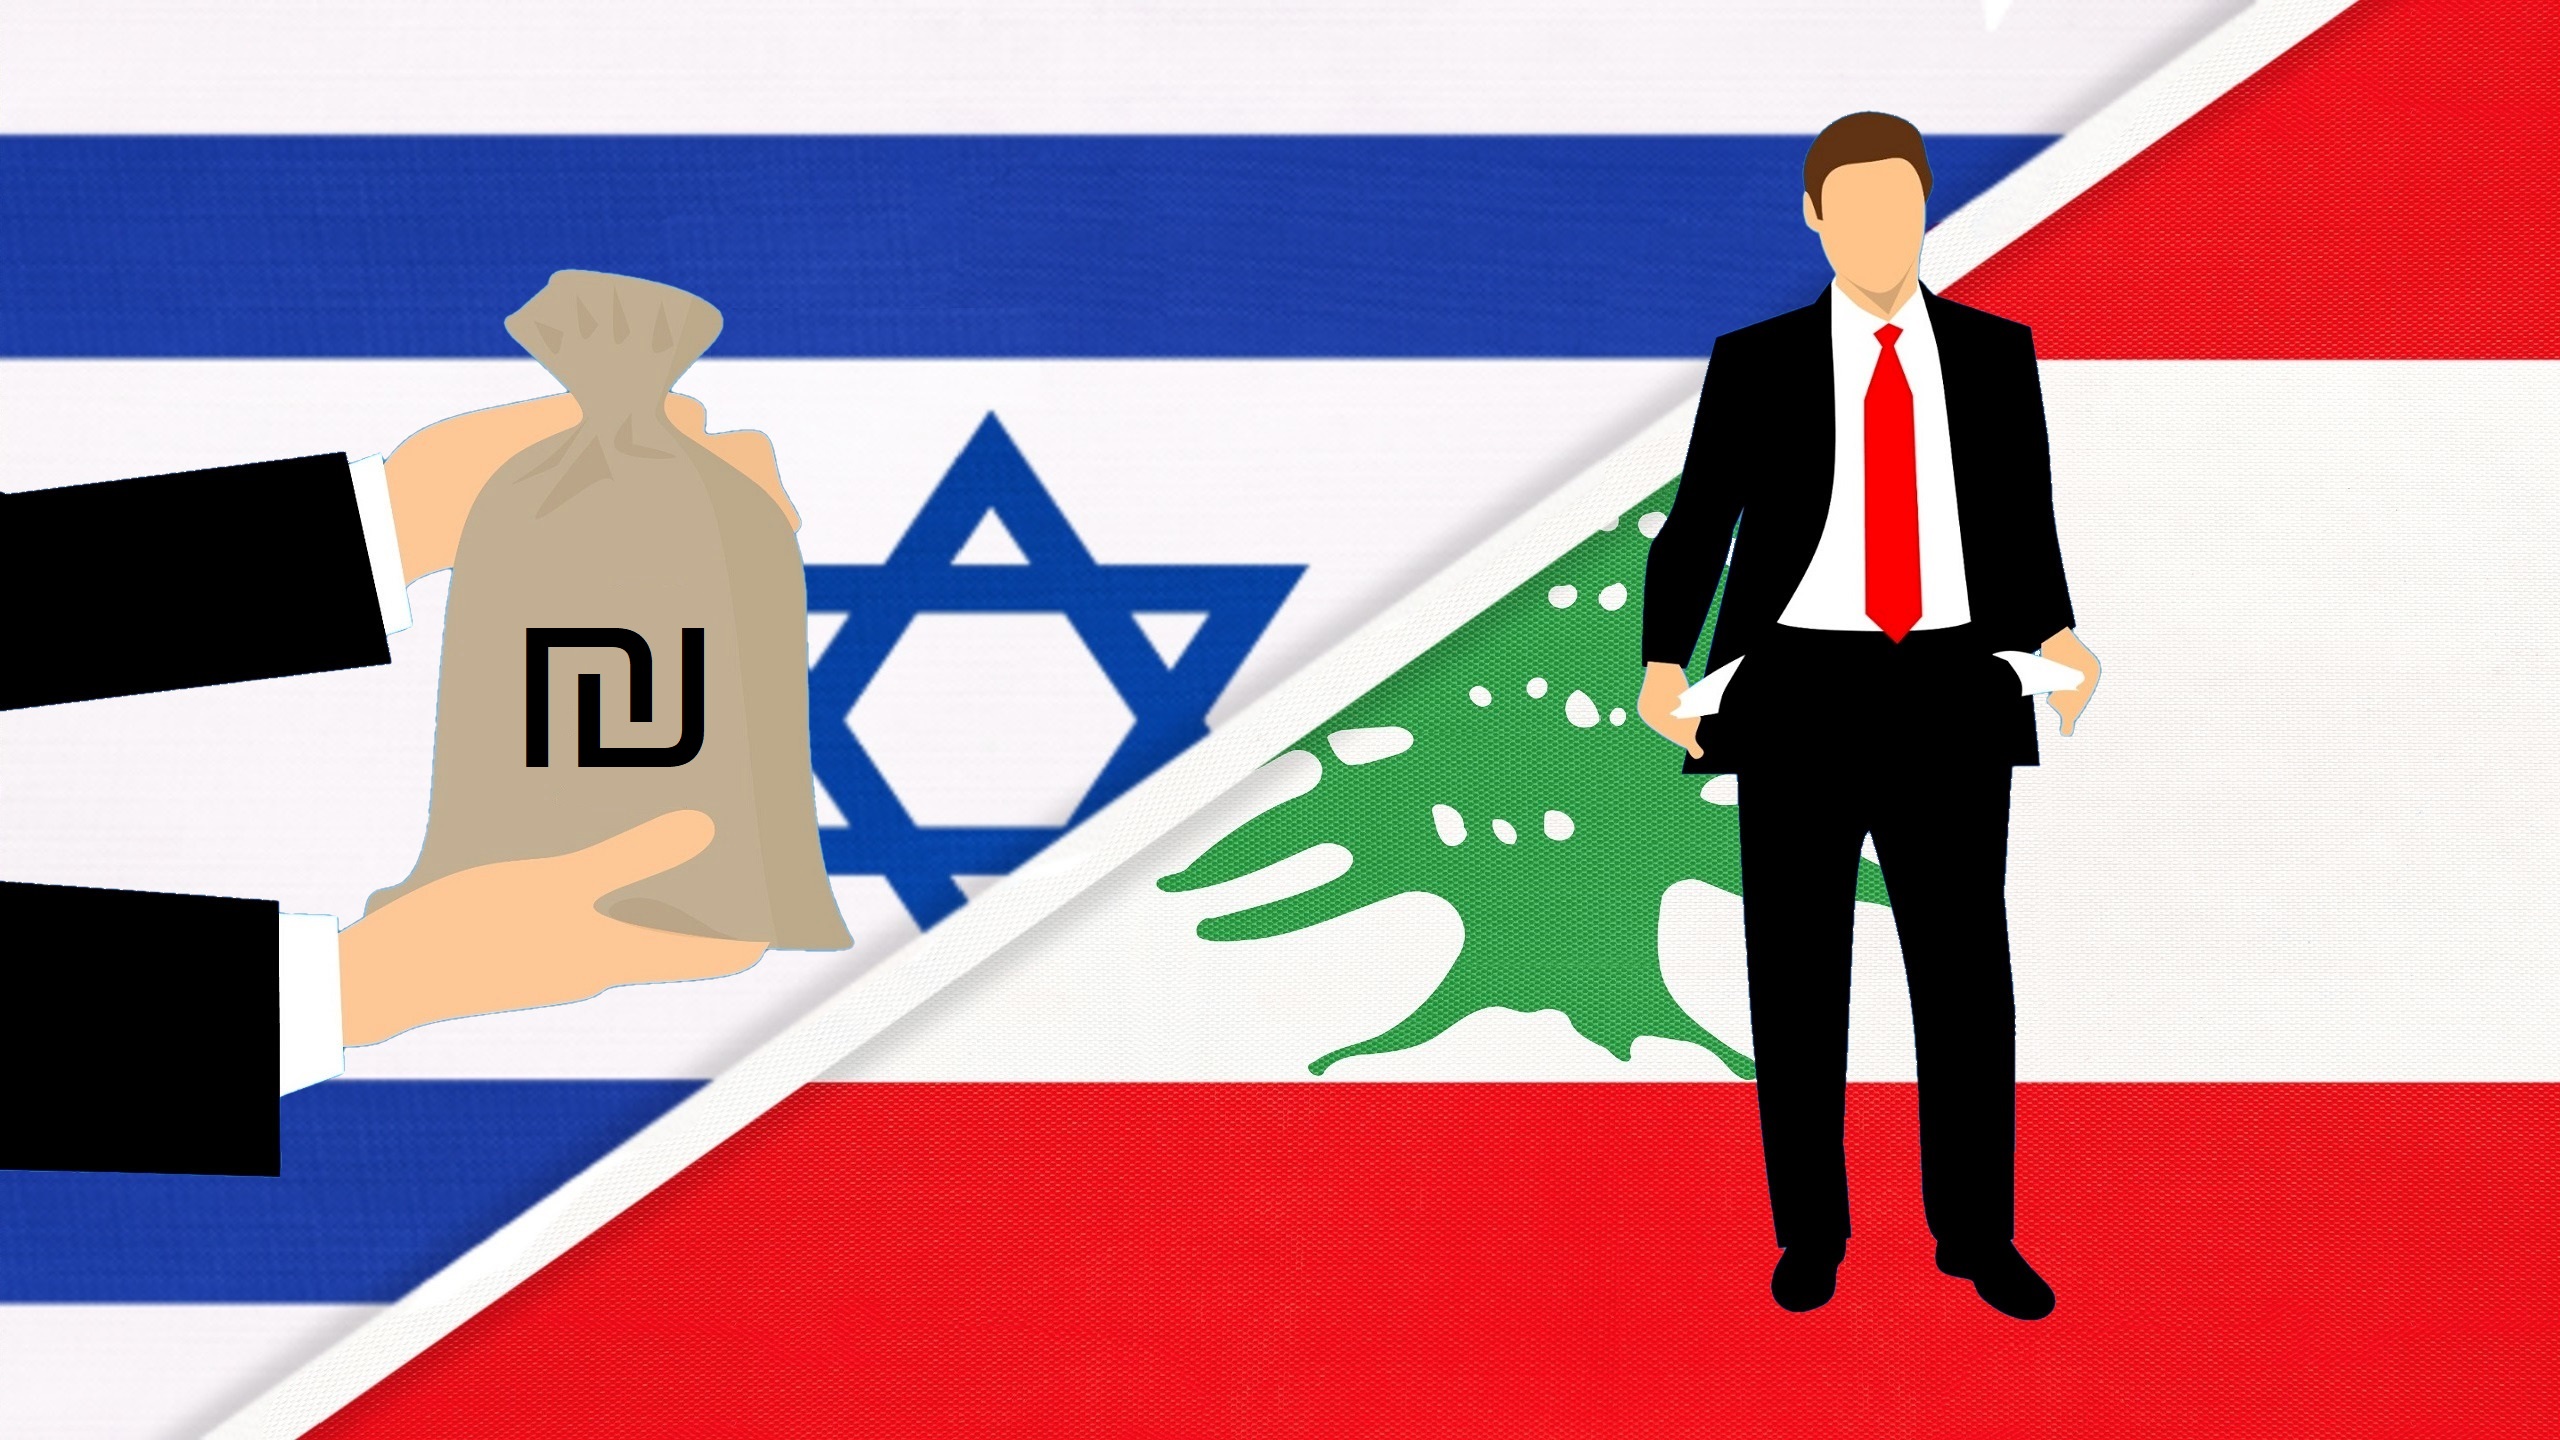 Israel’s Defense Minister Wants To Send Humanitarian Aid to Lebanon